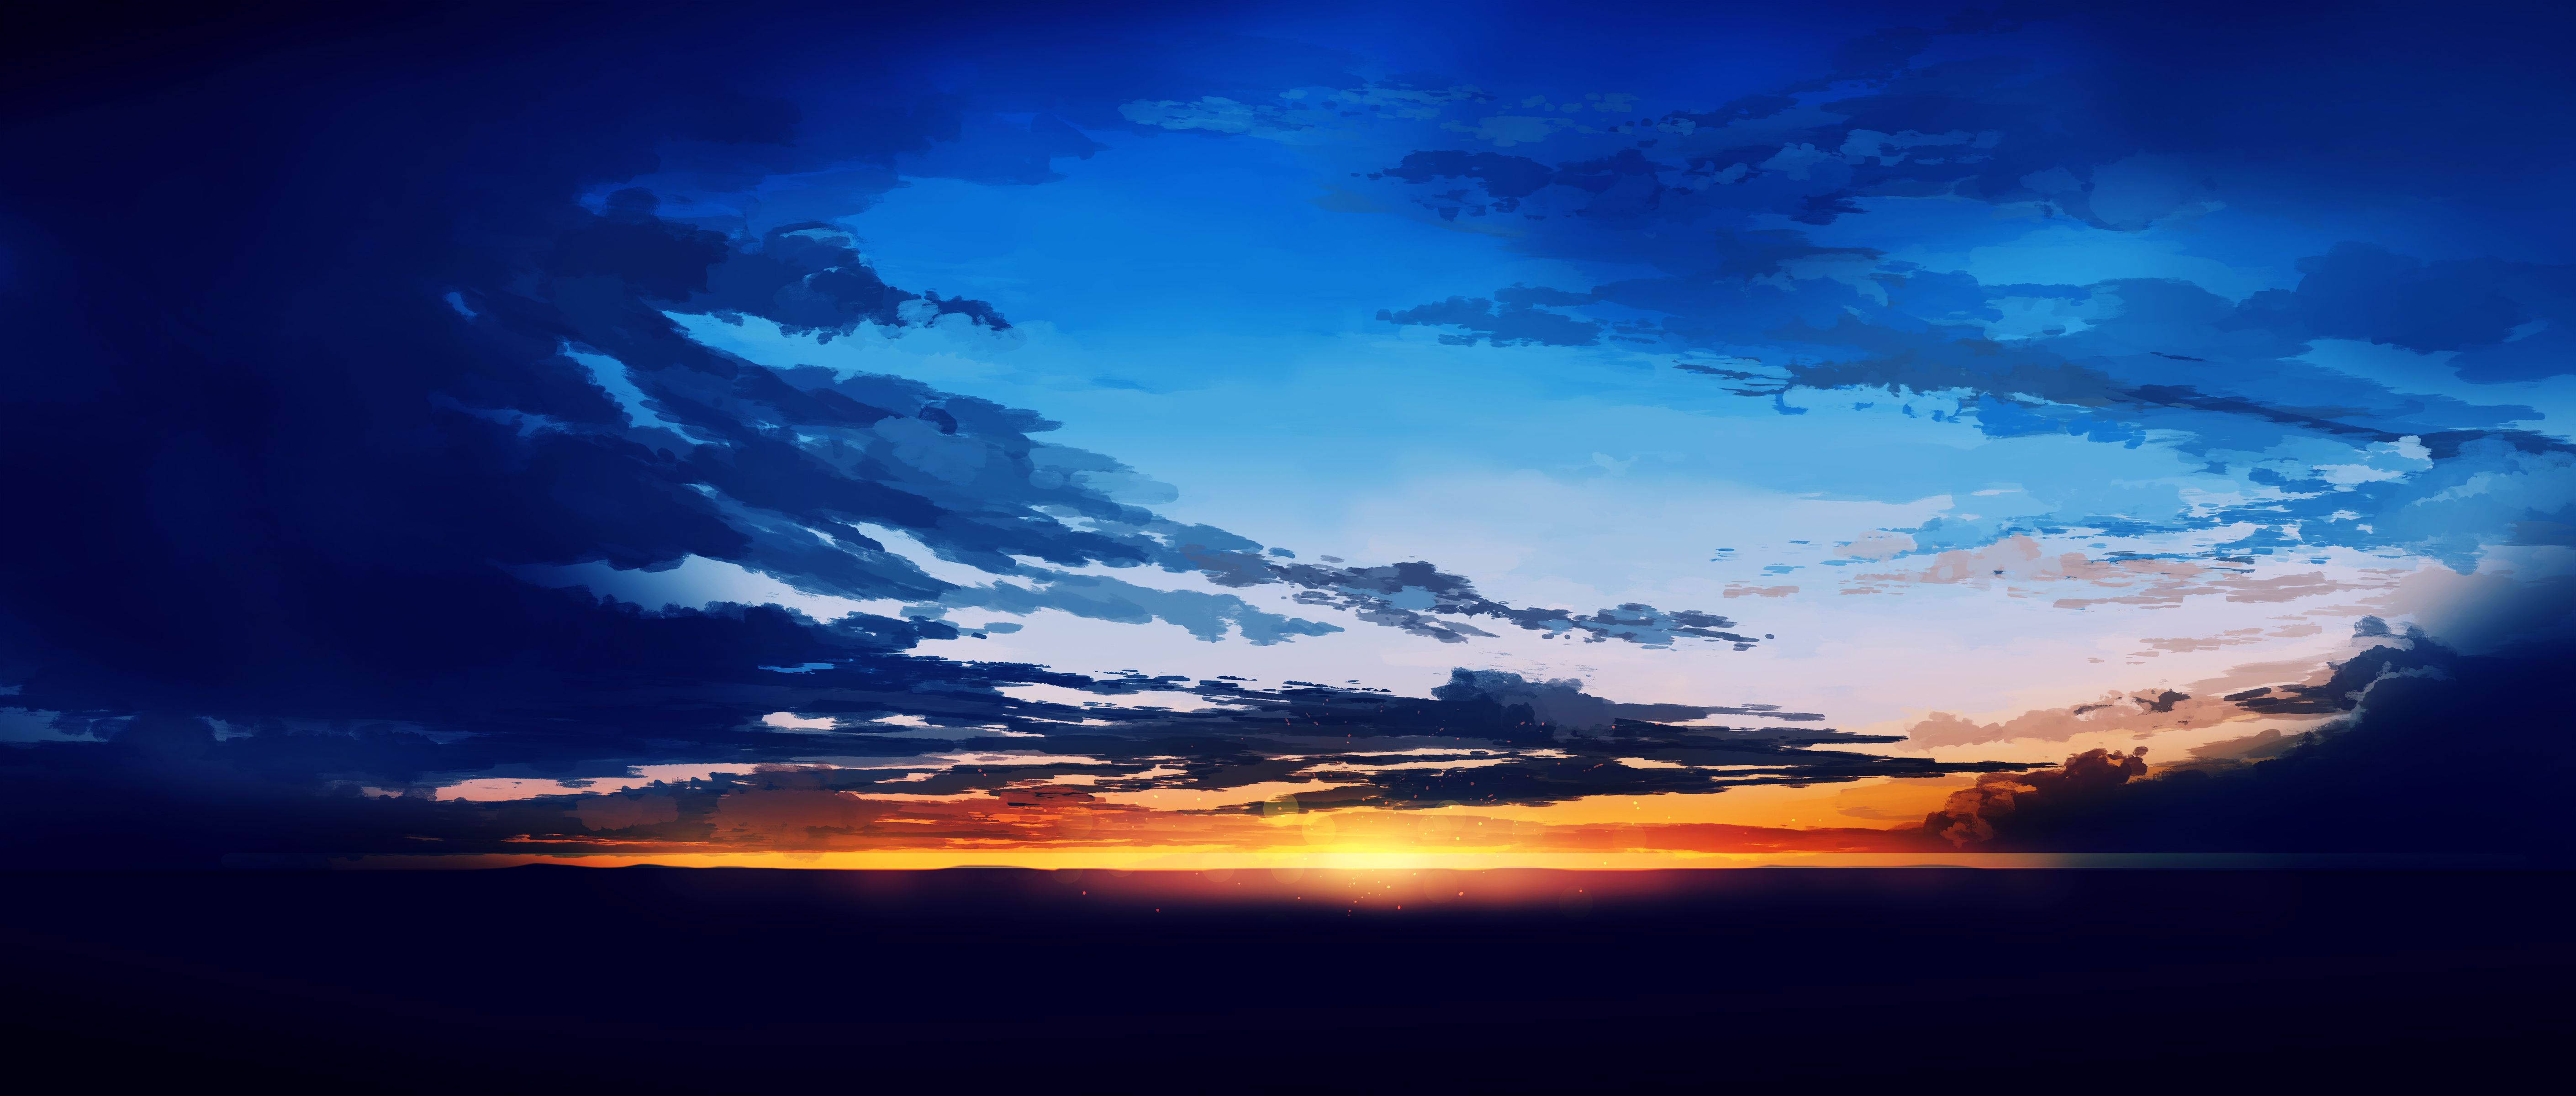 Artwork Digital Art Sunset Clouds Digital Painting Sky Sun Gracile 5640x2400